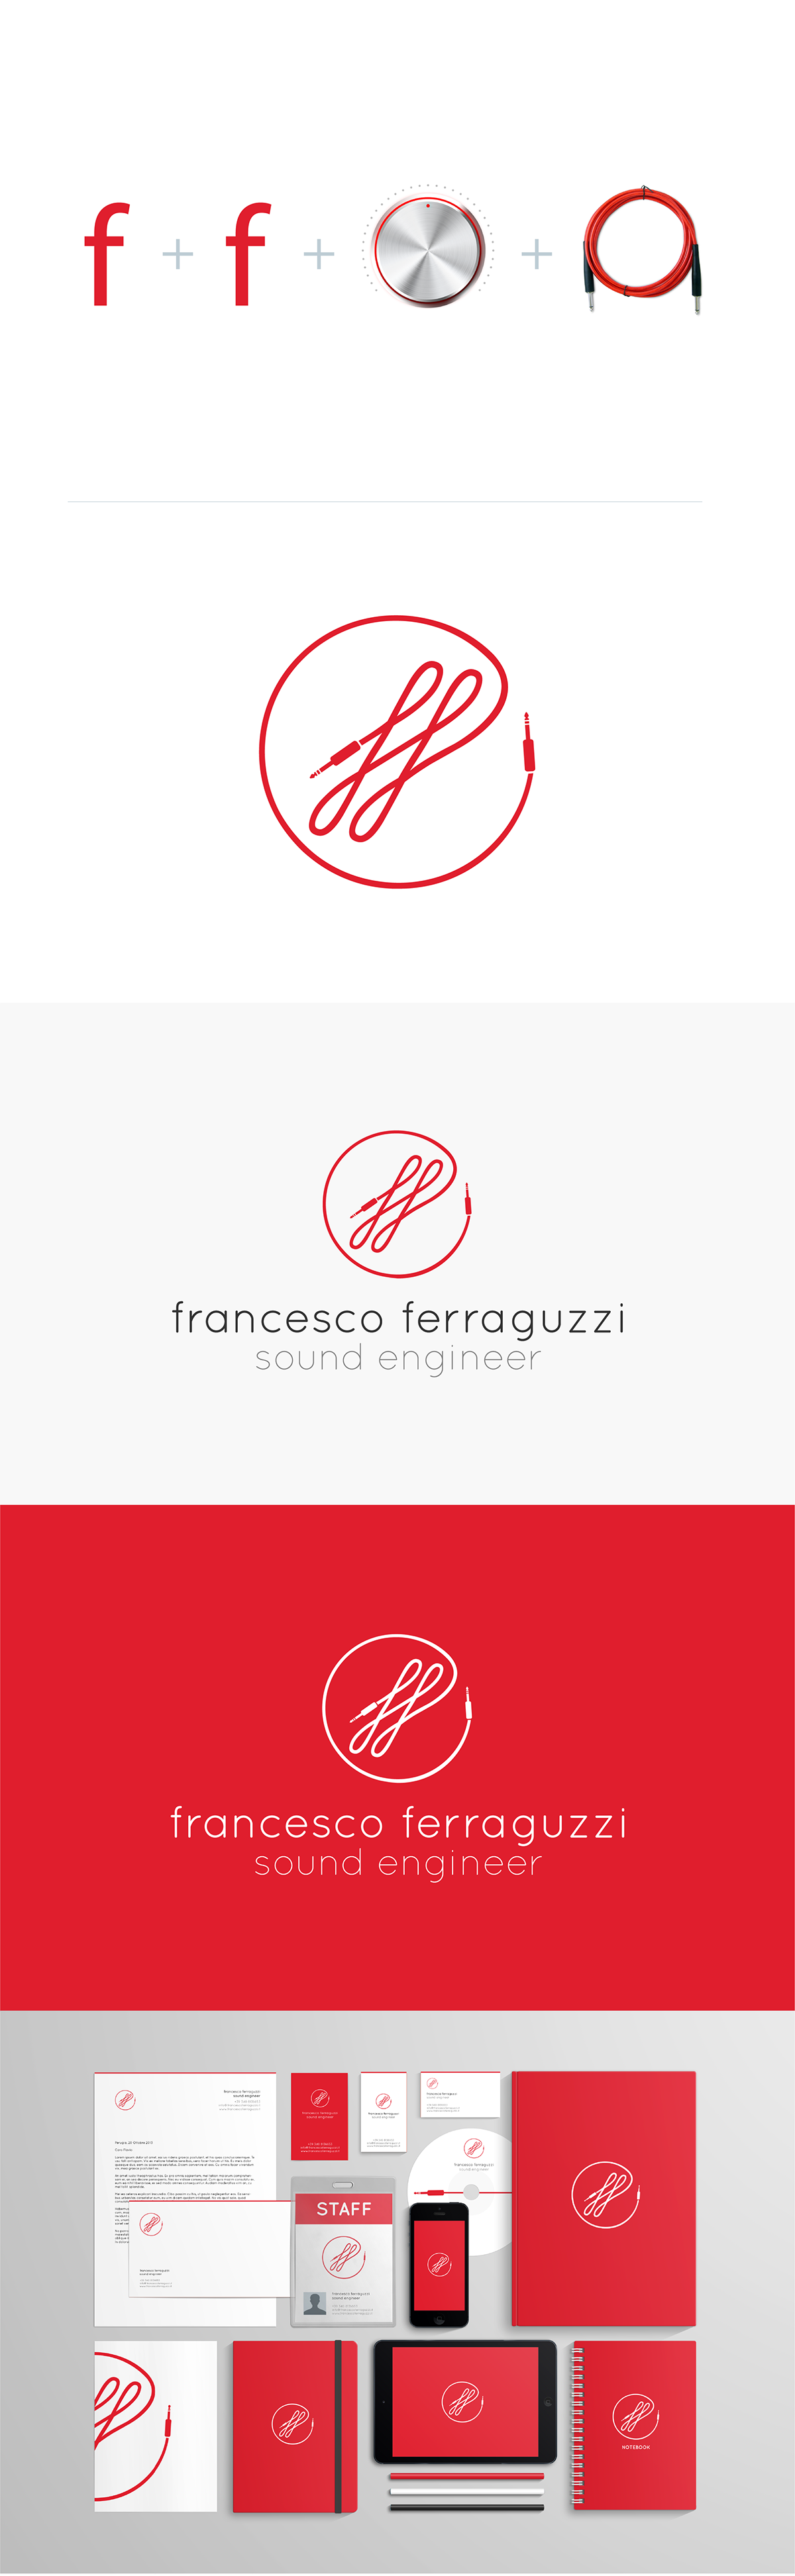 sound engineer Audio Engineer ingegnere audio ingegnere suono monitor engineer f.o.h. engineer